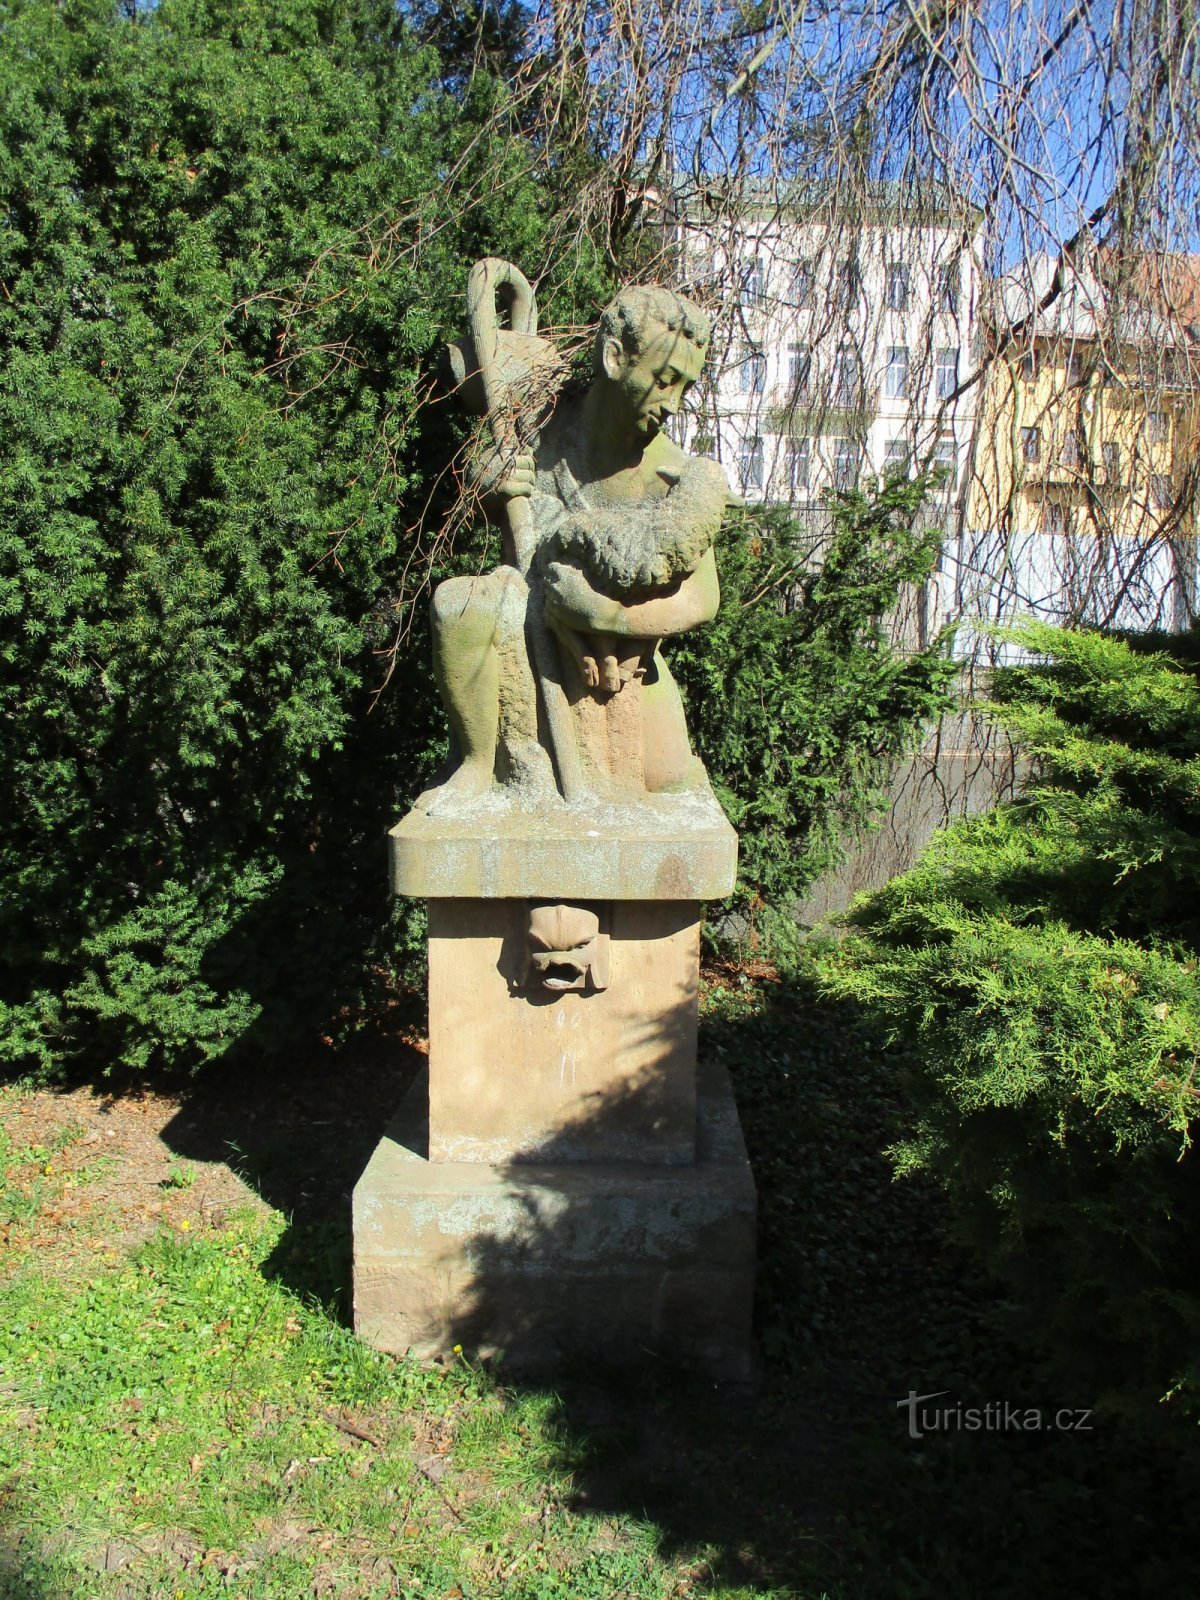 Kip pastirja v Masarykovih vrtovih (Jaroměř, 22.4.2020. XNUMX. XNUMX)